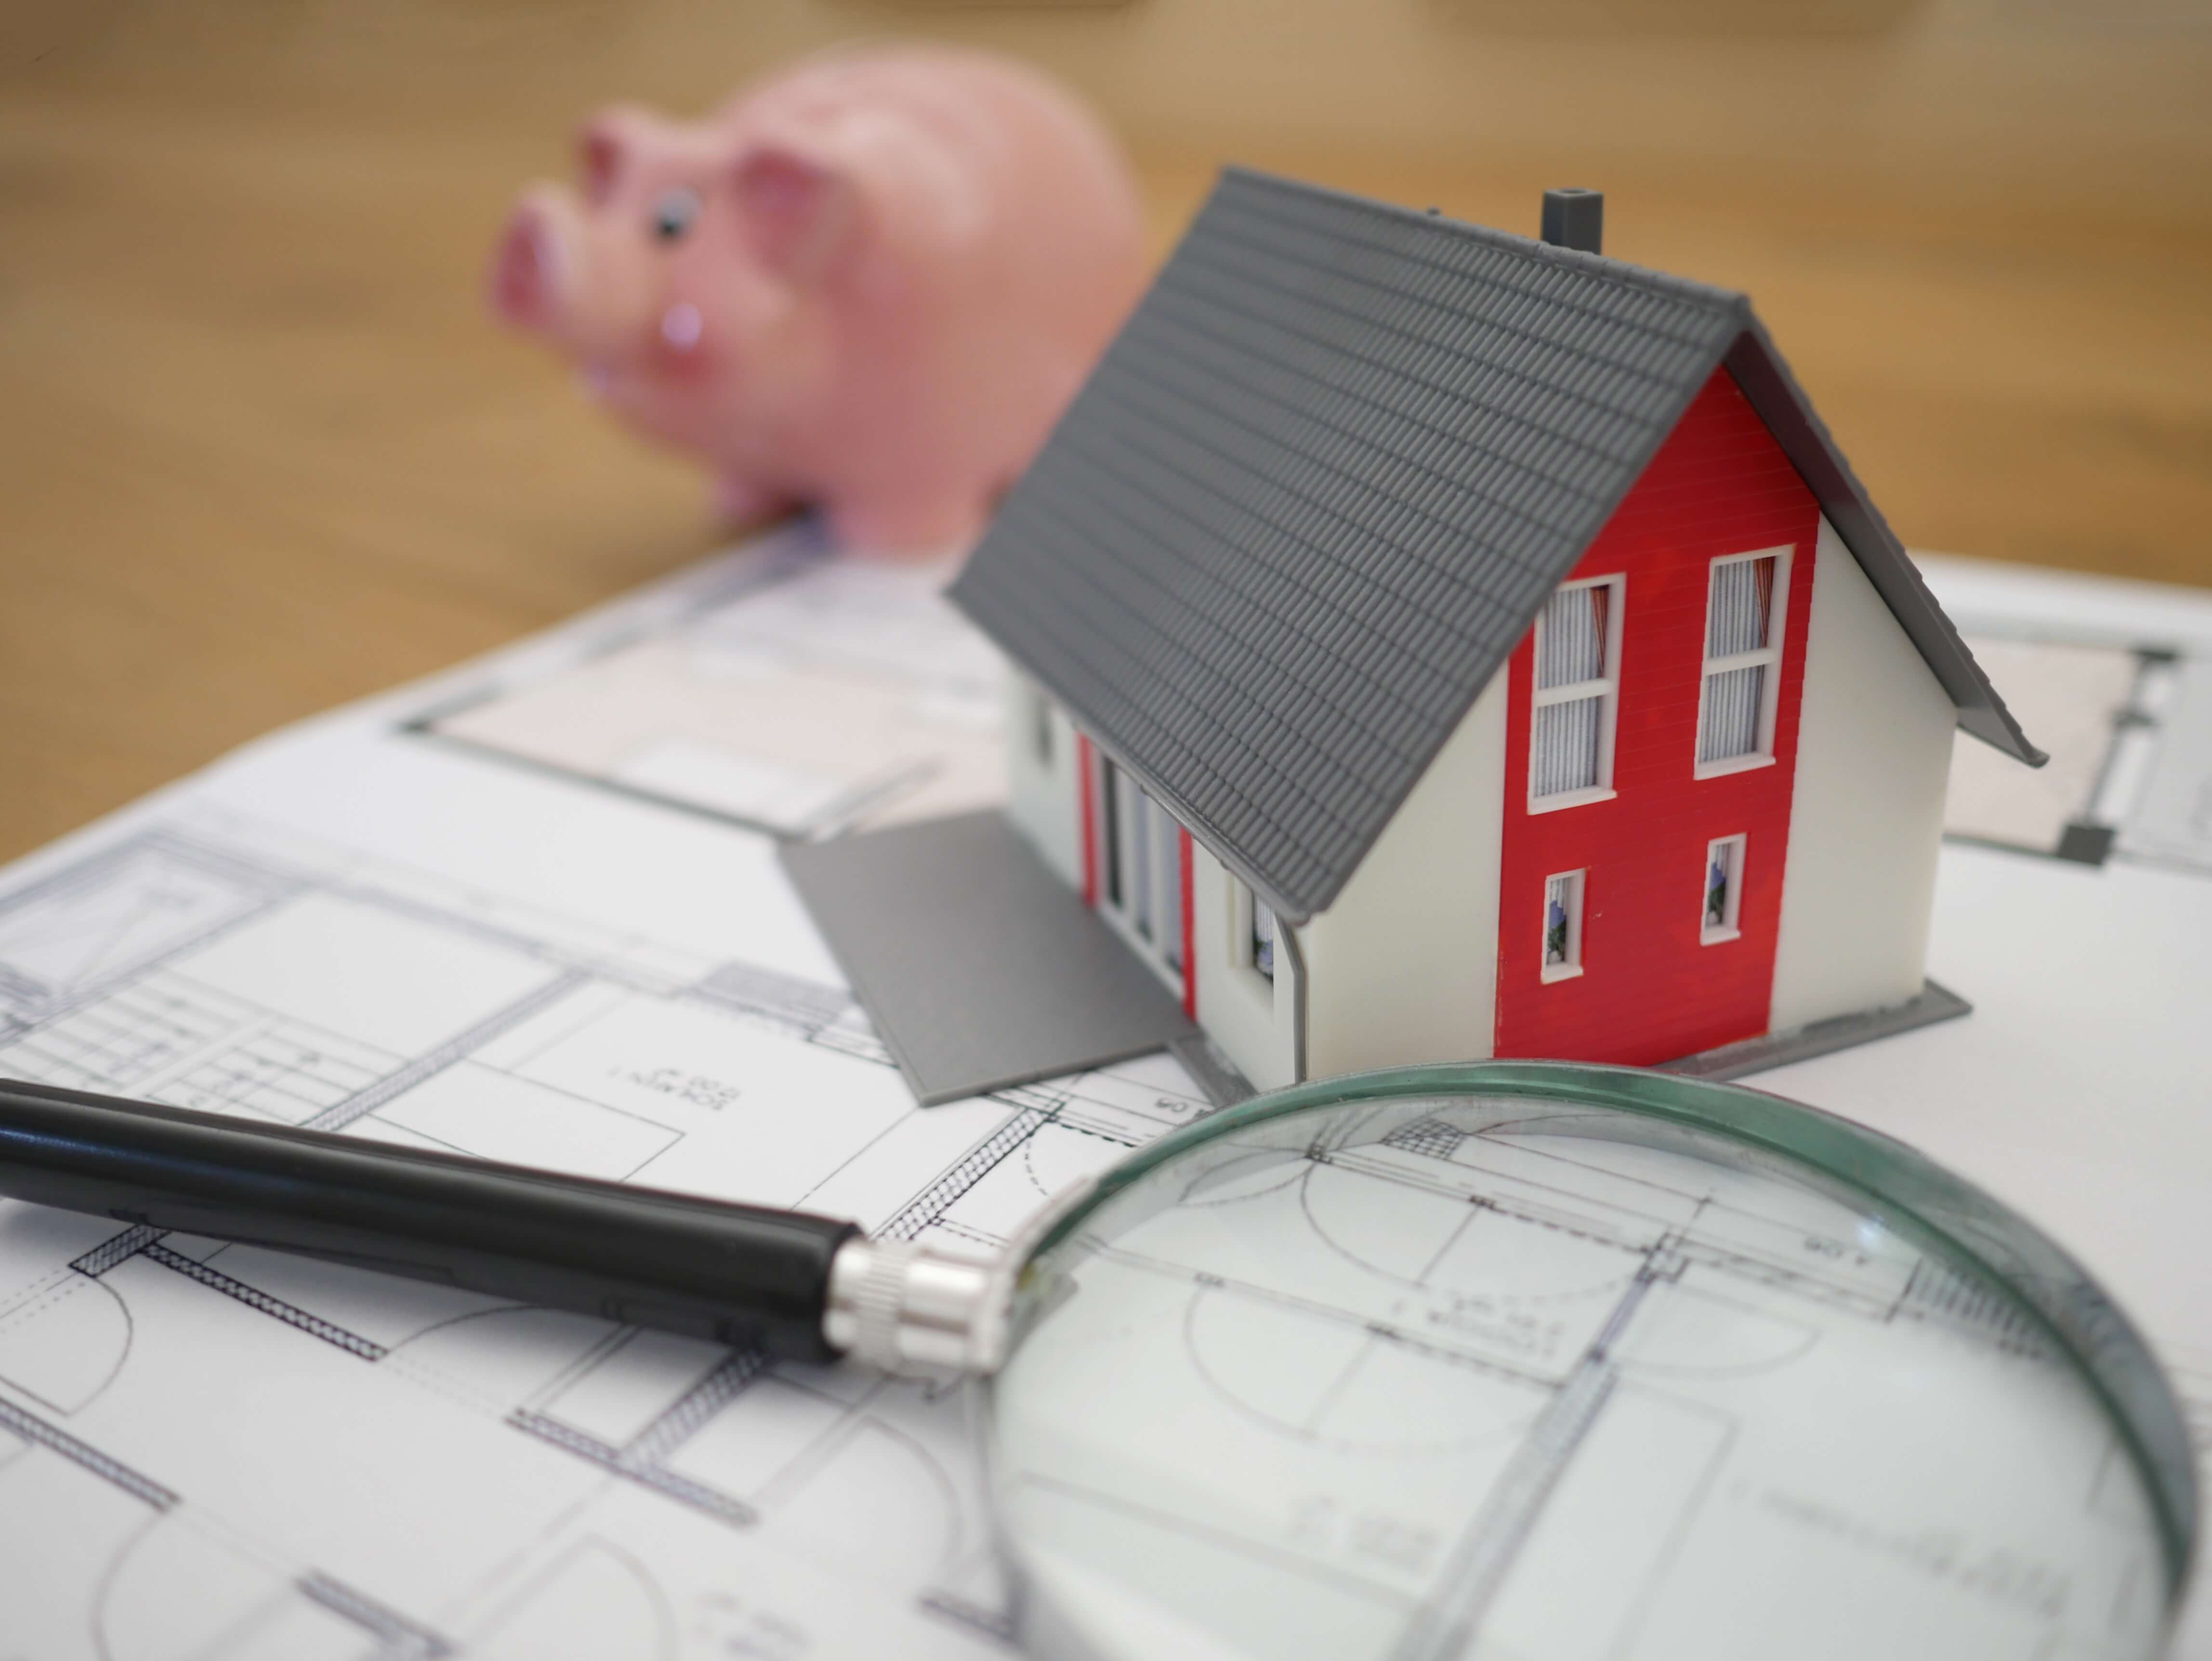 Rental Property Mortgages